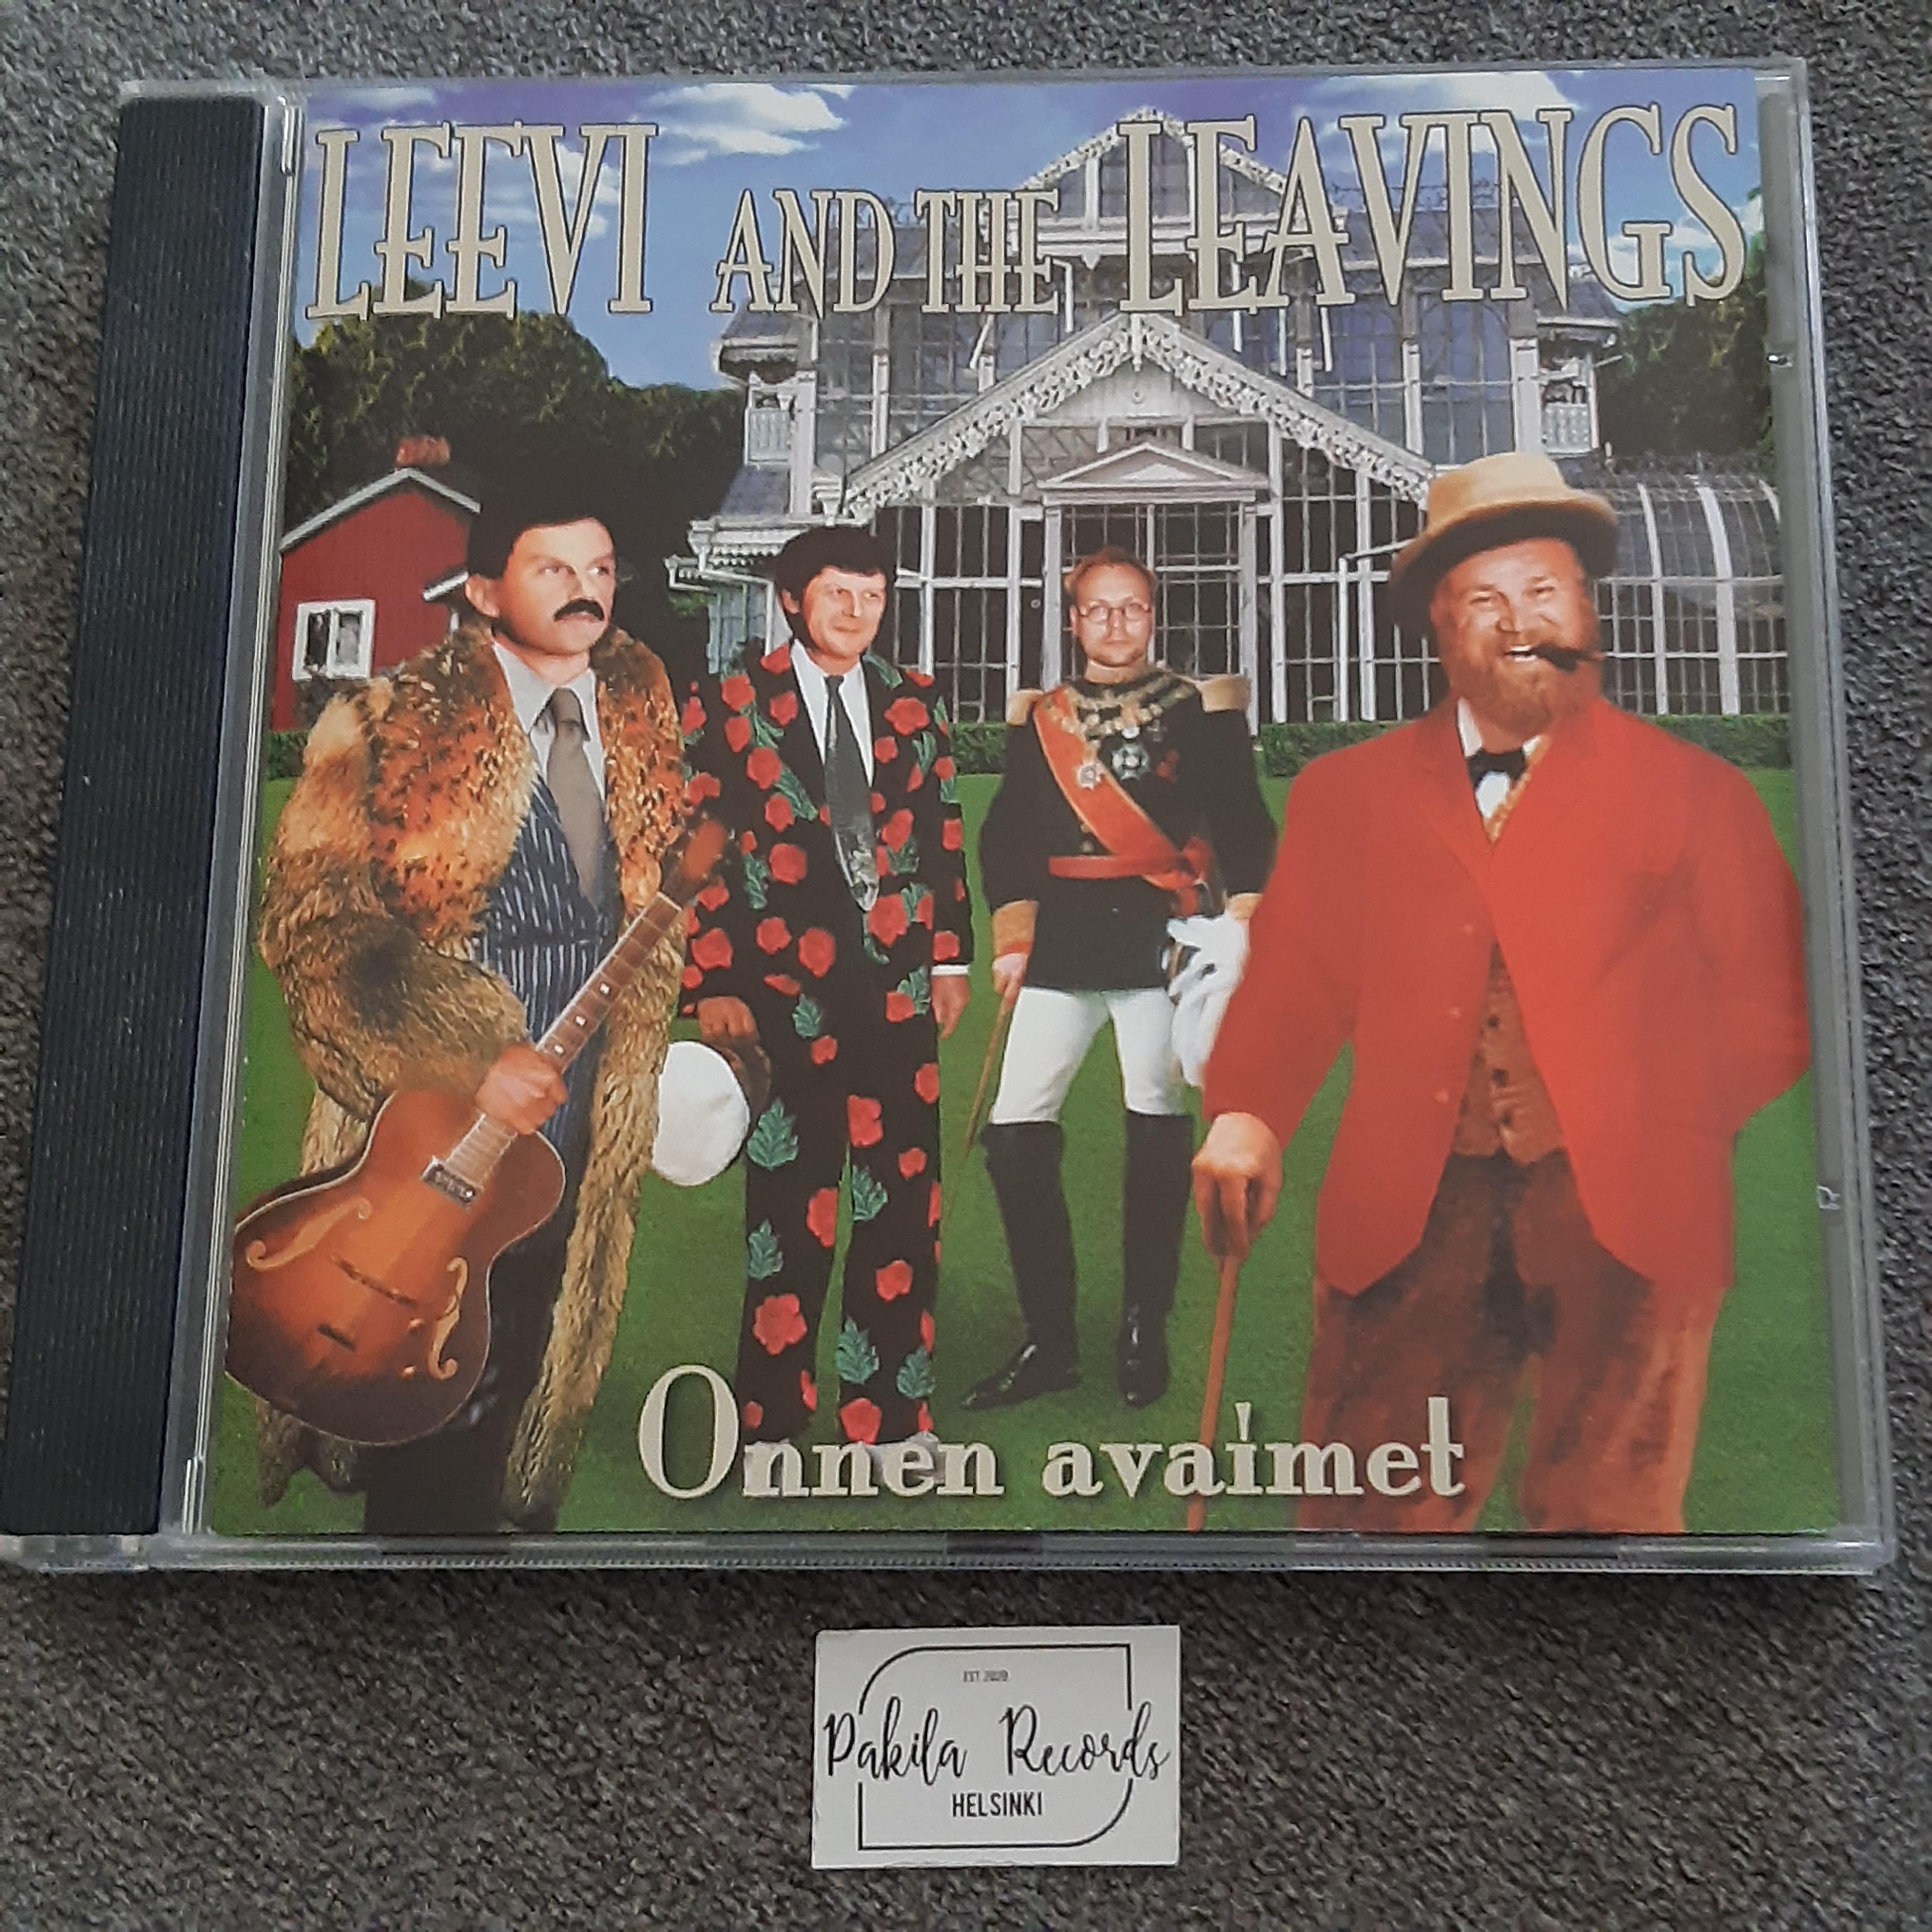 Leevi And The Leavings - Onnen avaimet - CD (käytetty)